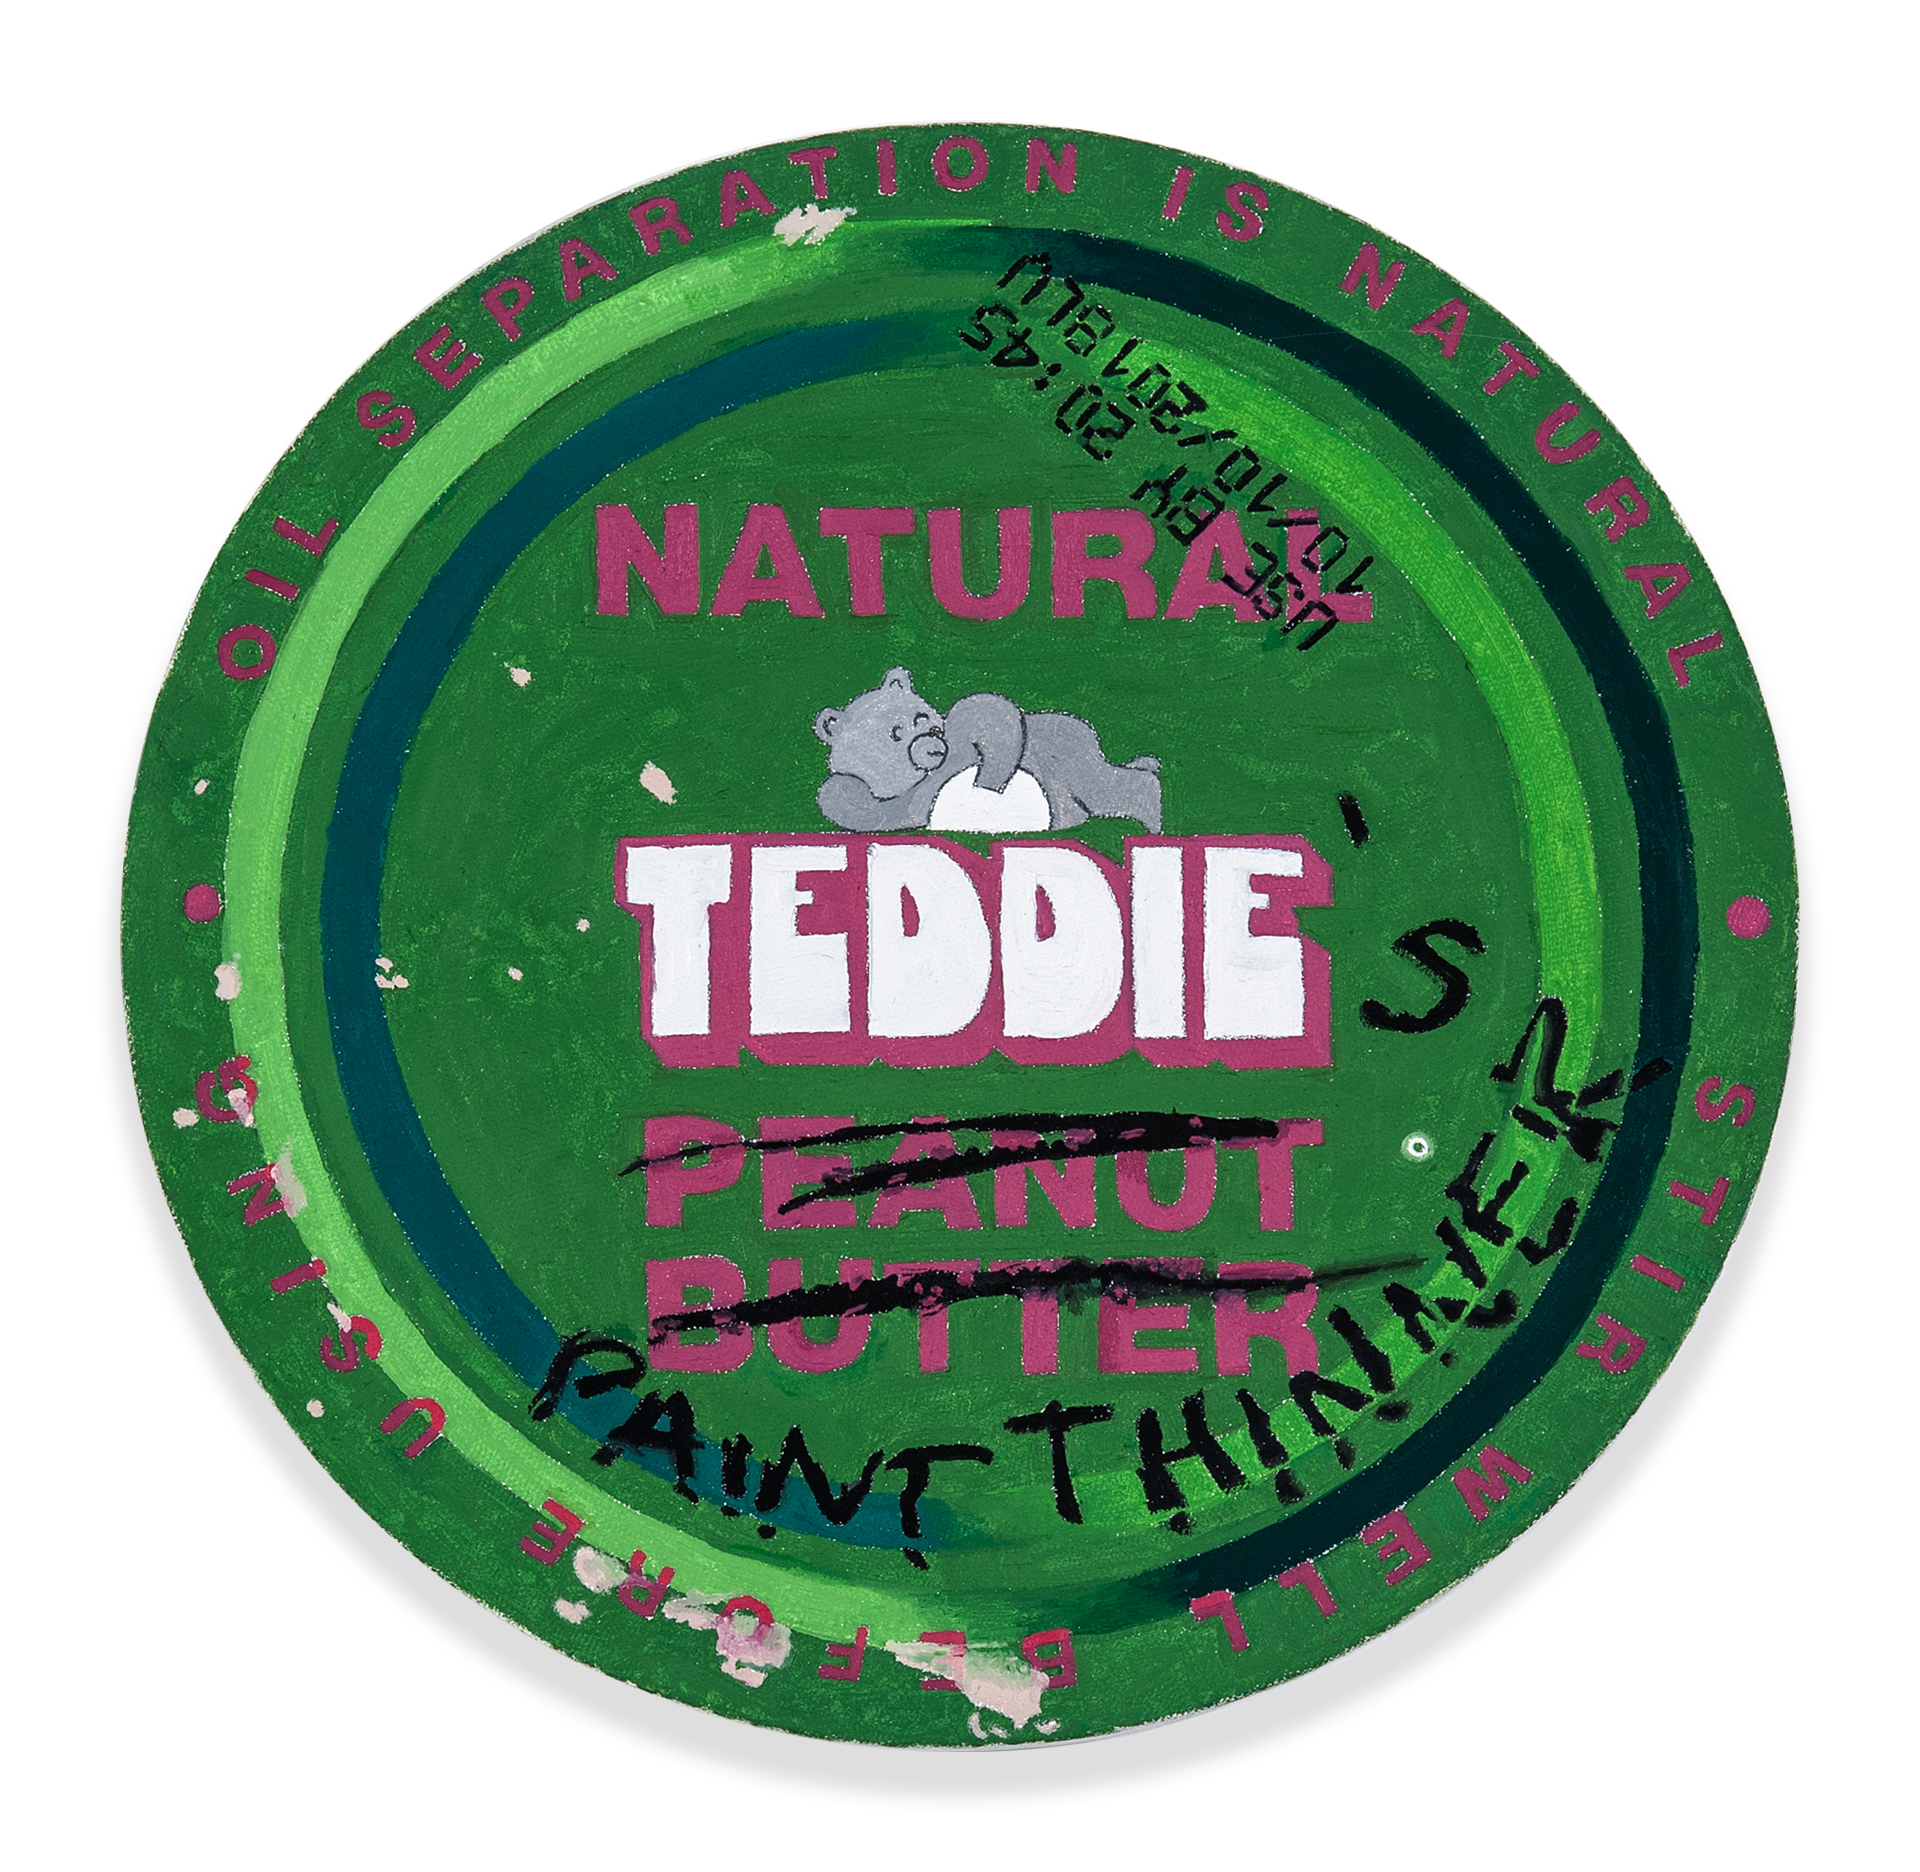 Teddie('s Paint Thinner)